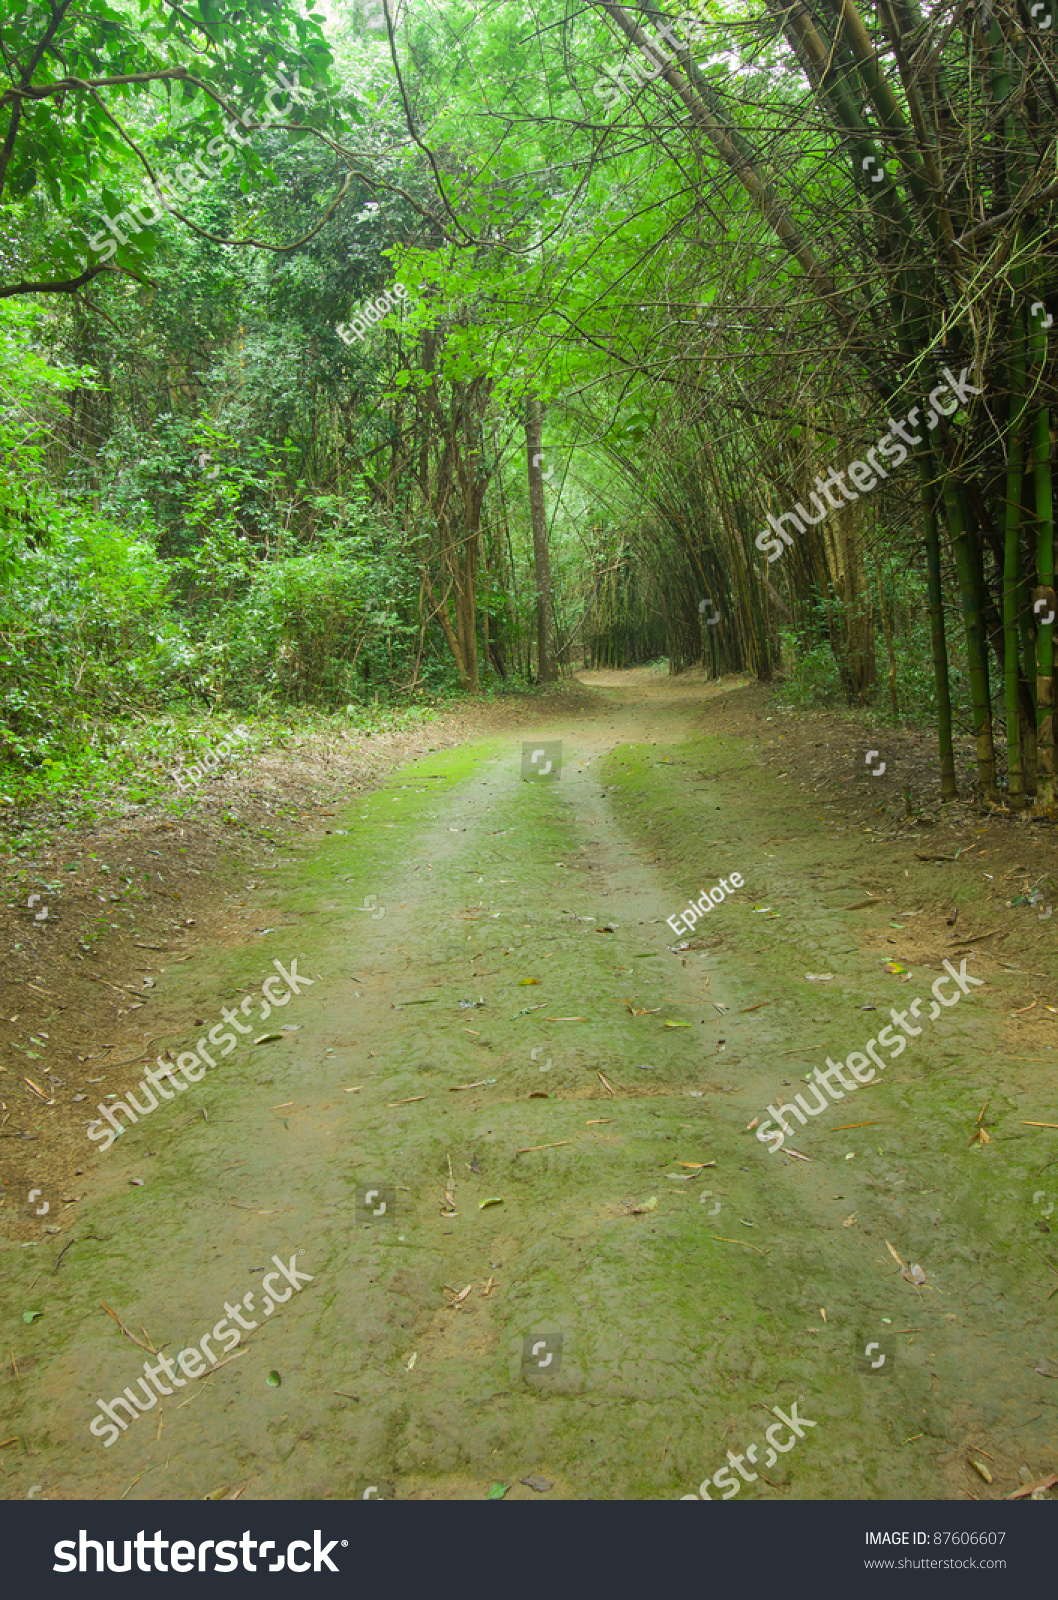 Walkways in the jungle #87606607